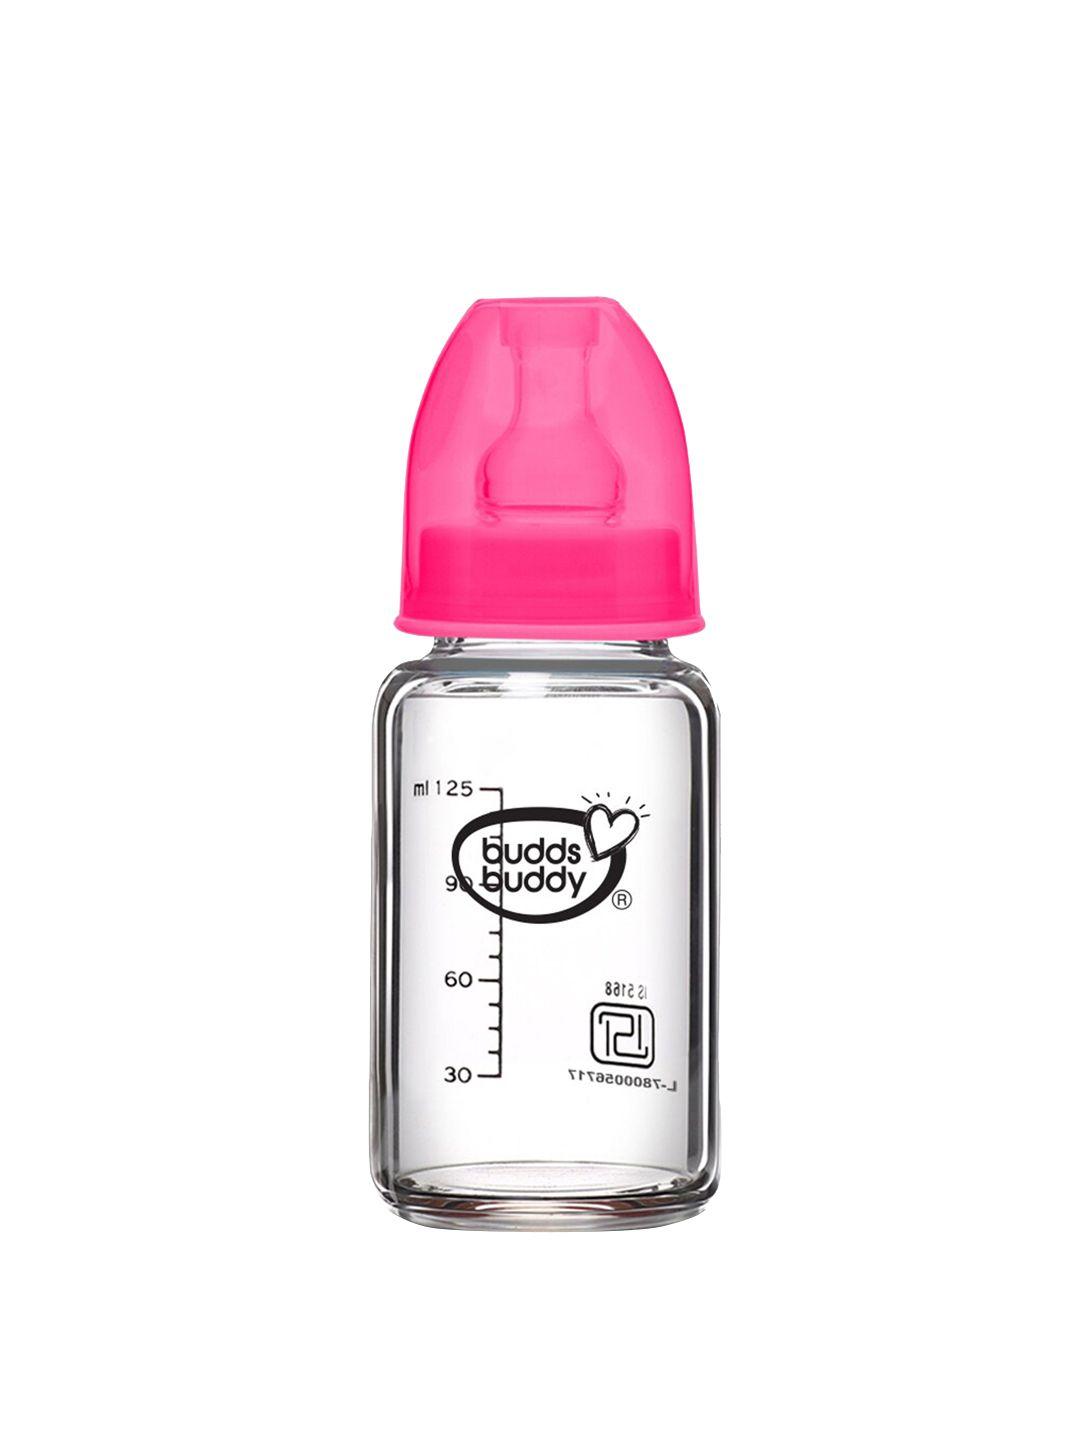 buddsbuddy pink glass printed baby feeding bottle- 125ml